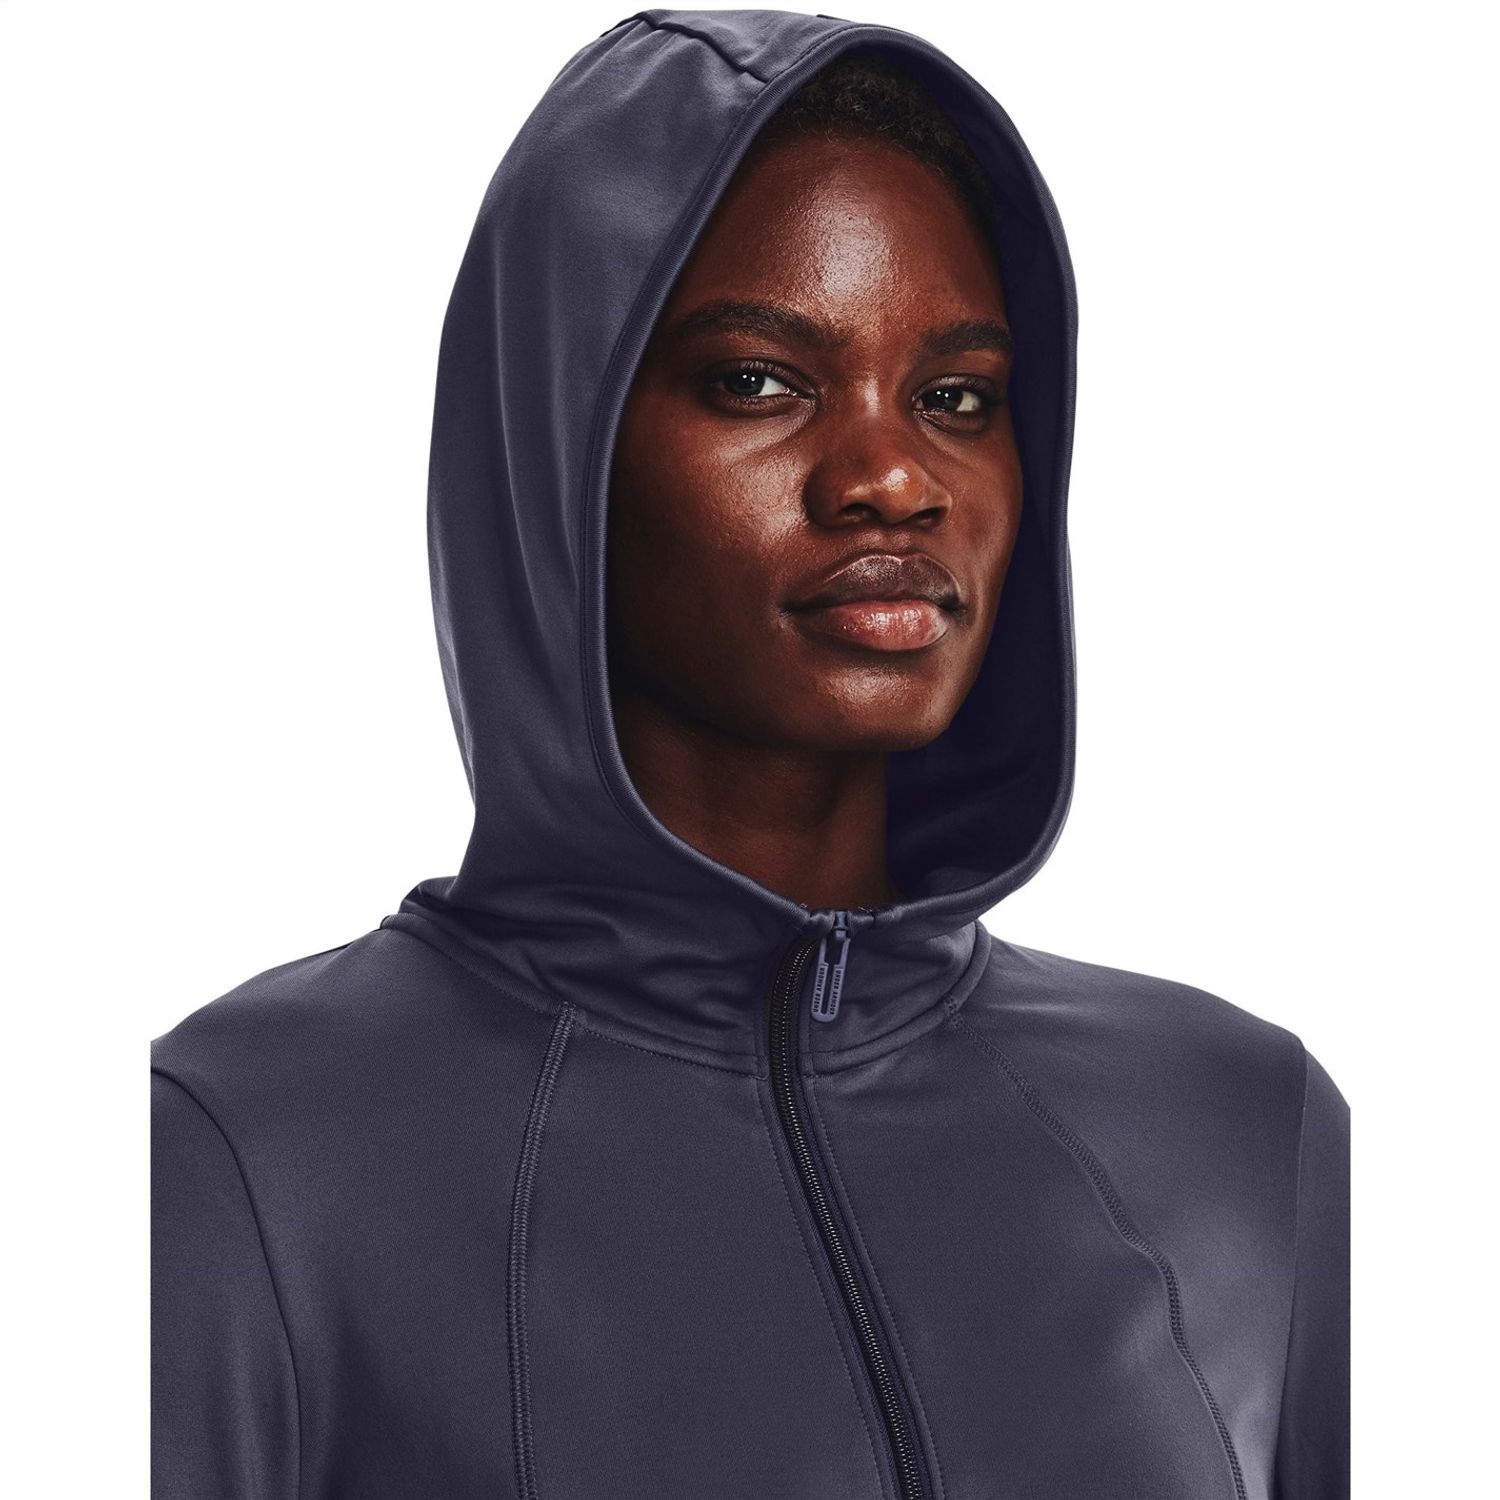 https://gtl-uk.prod.myauroraassets.com/p/171739/womens-ua-meridian-cold-weather-jacket-fr2442262under-armour-womens-ua-meridian-cold-weather-jacket-fr2442262.jpg?t=rp&w=1500&h=1500